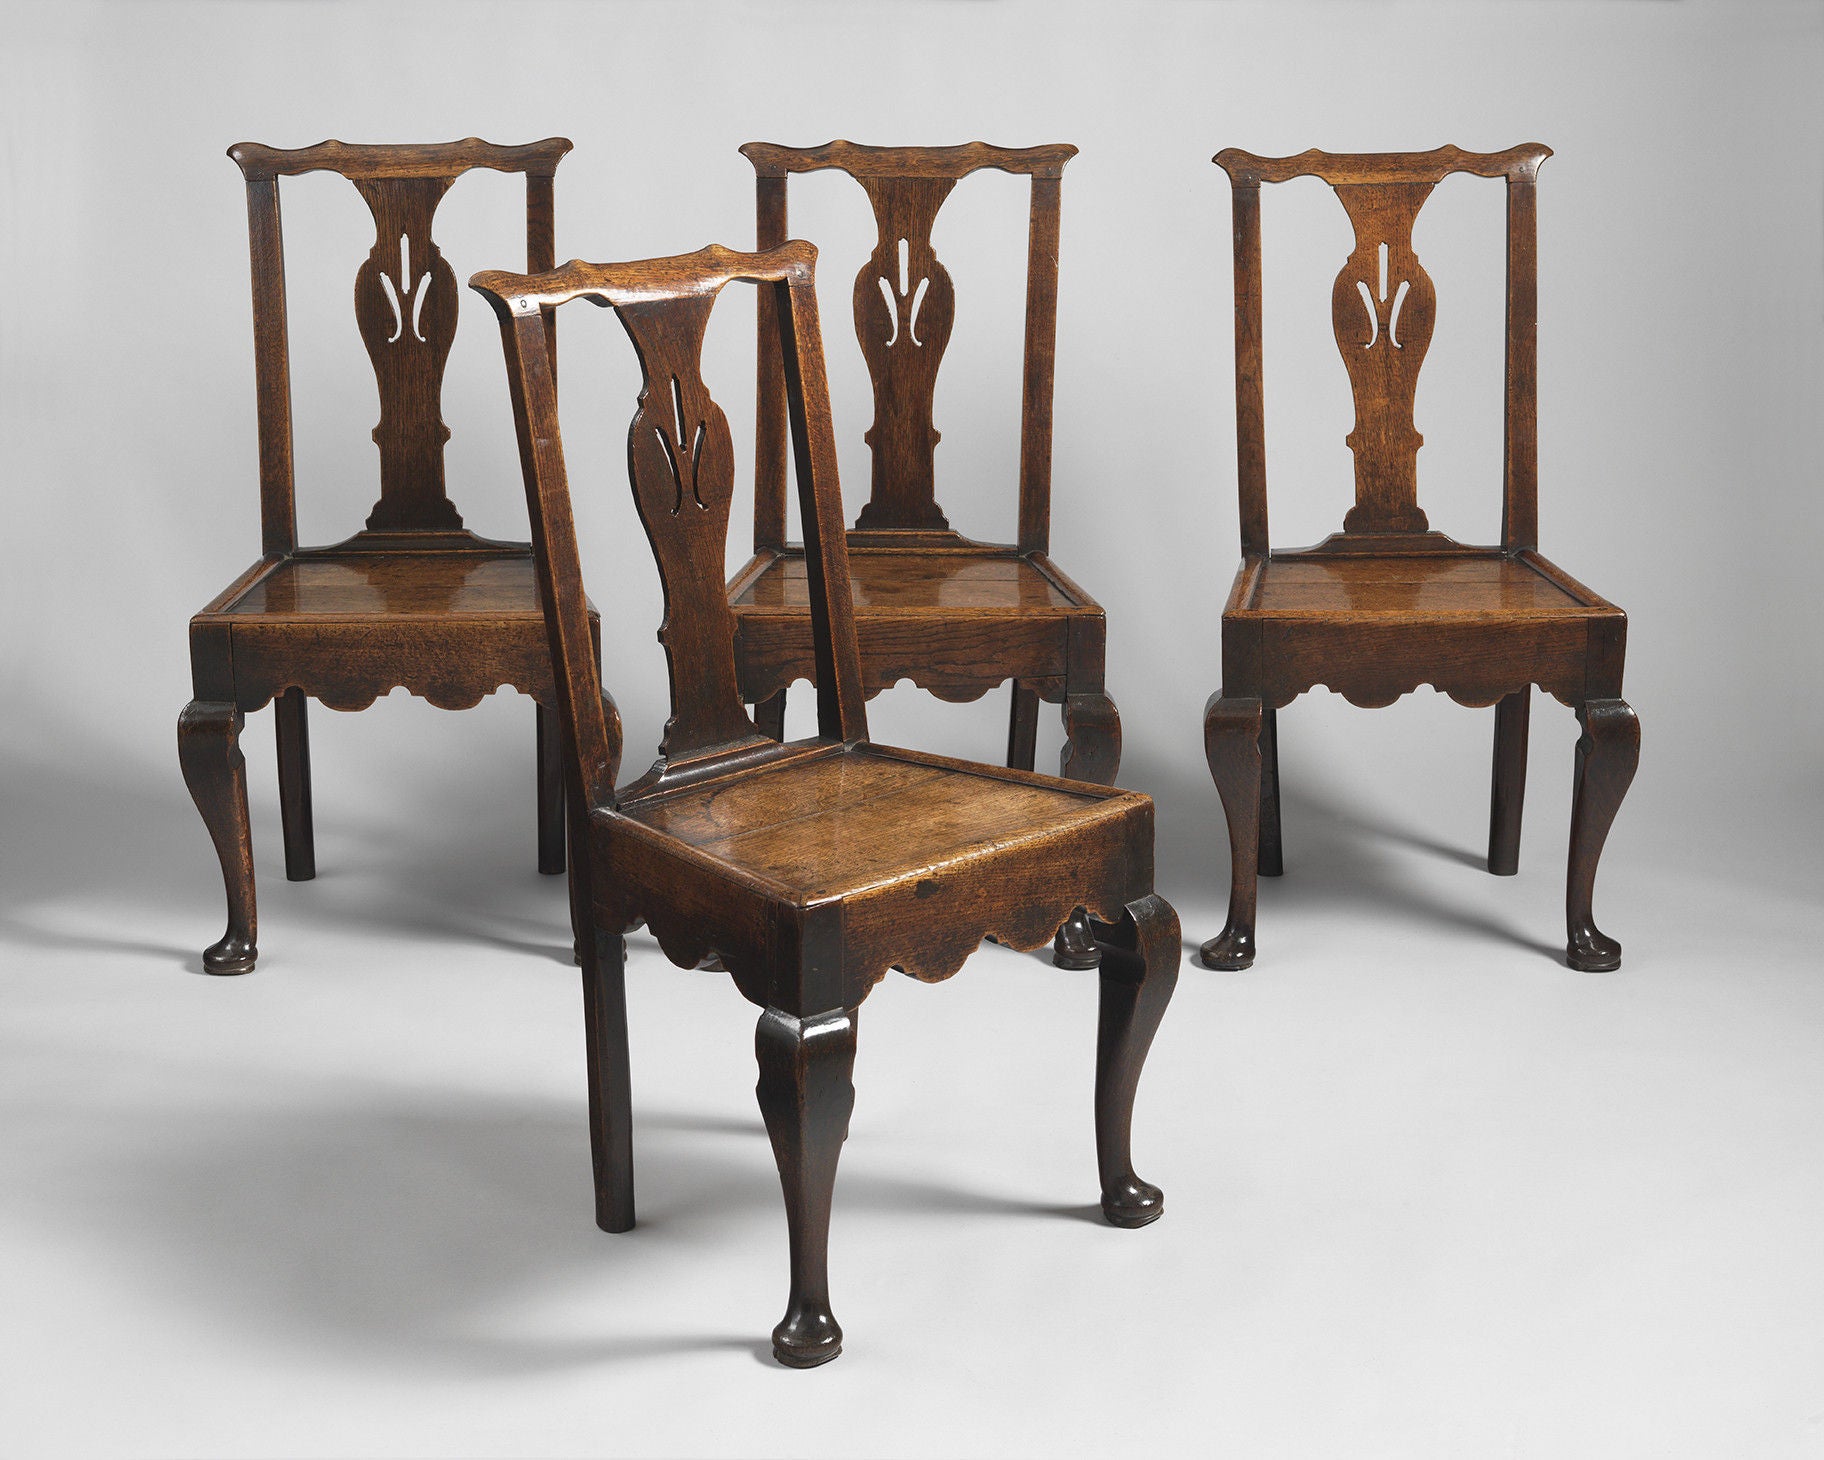 An Original Set of Four Cabriole Leg Chairs